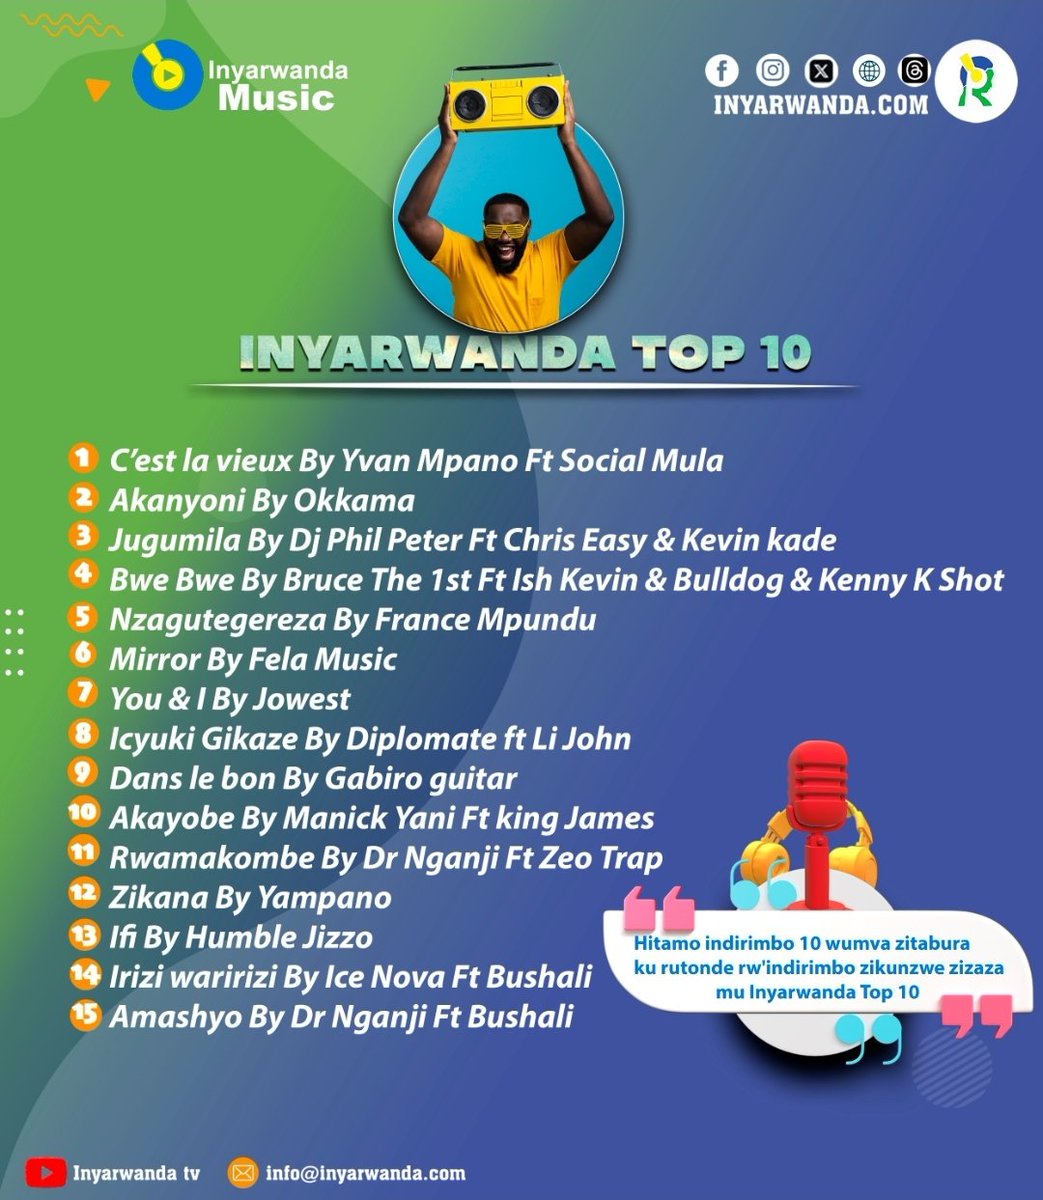 Hitamo indirimbo wumva itagomba kubura muri Top 10 yacu izabageraho mu mpera z'iki cyumweru. Graphic: @murenzidieudonne #inyarwanda #inyarwandaartstudio #nonehoevents